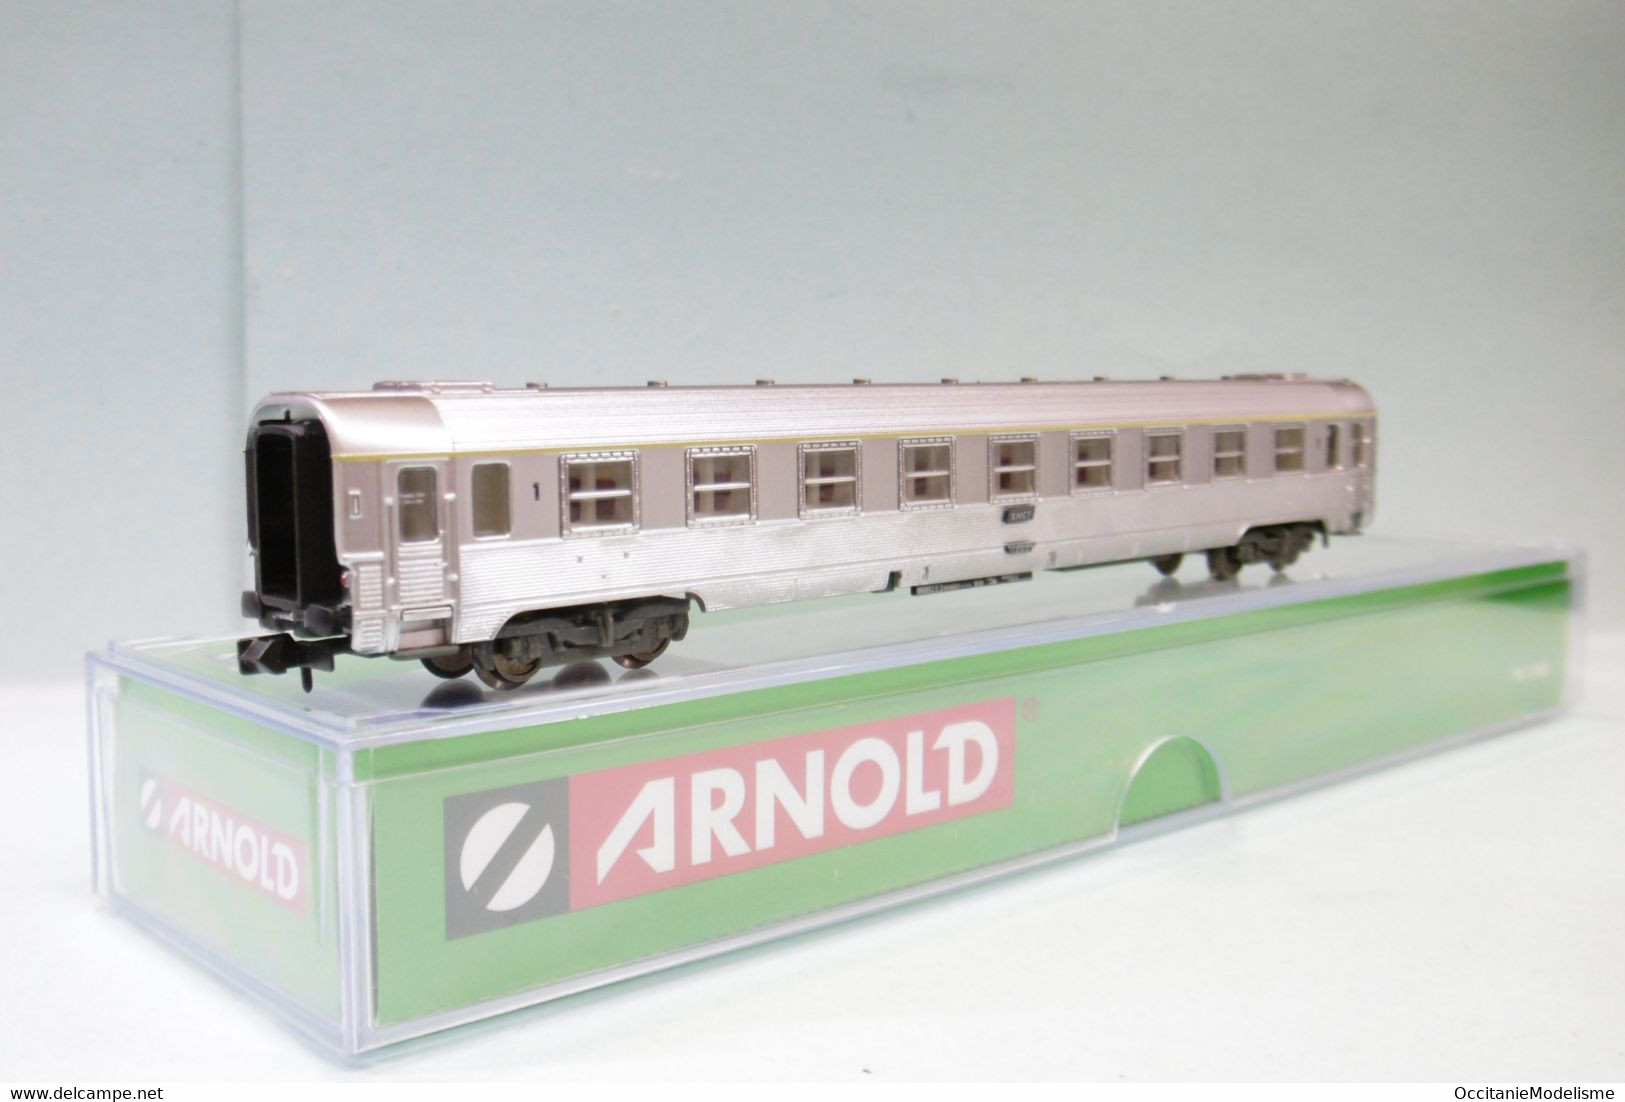 Arnold - Voiture DEV INOX A9 1ère Classe SNCF ép. IV Réf. HN4324 Neuf N 1/160 - Voitures Voyageurs